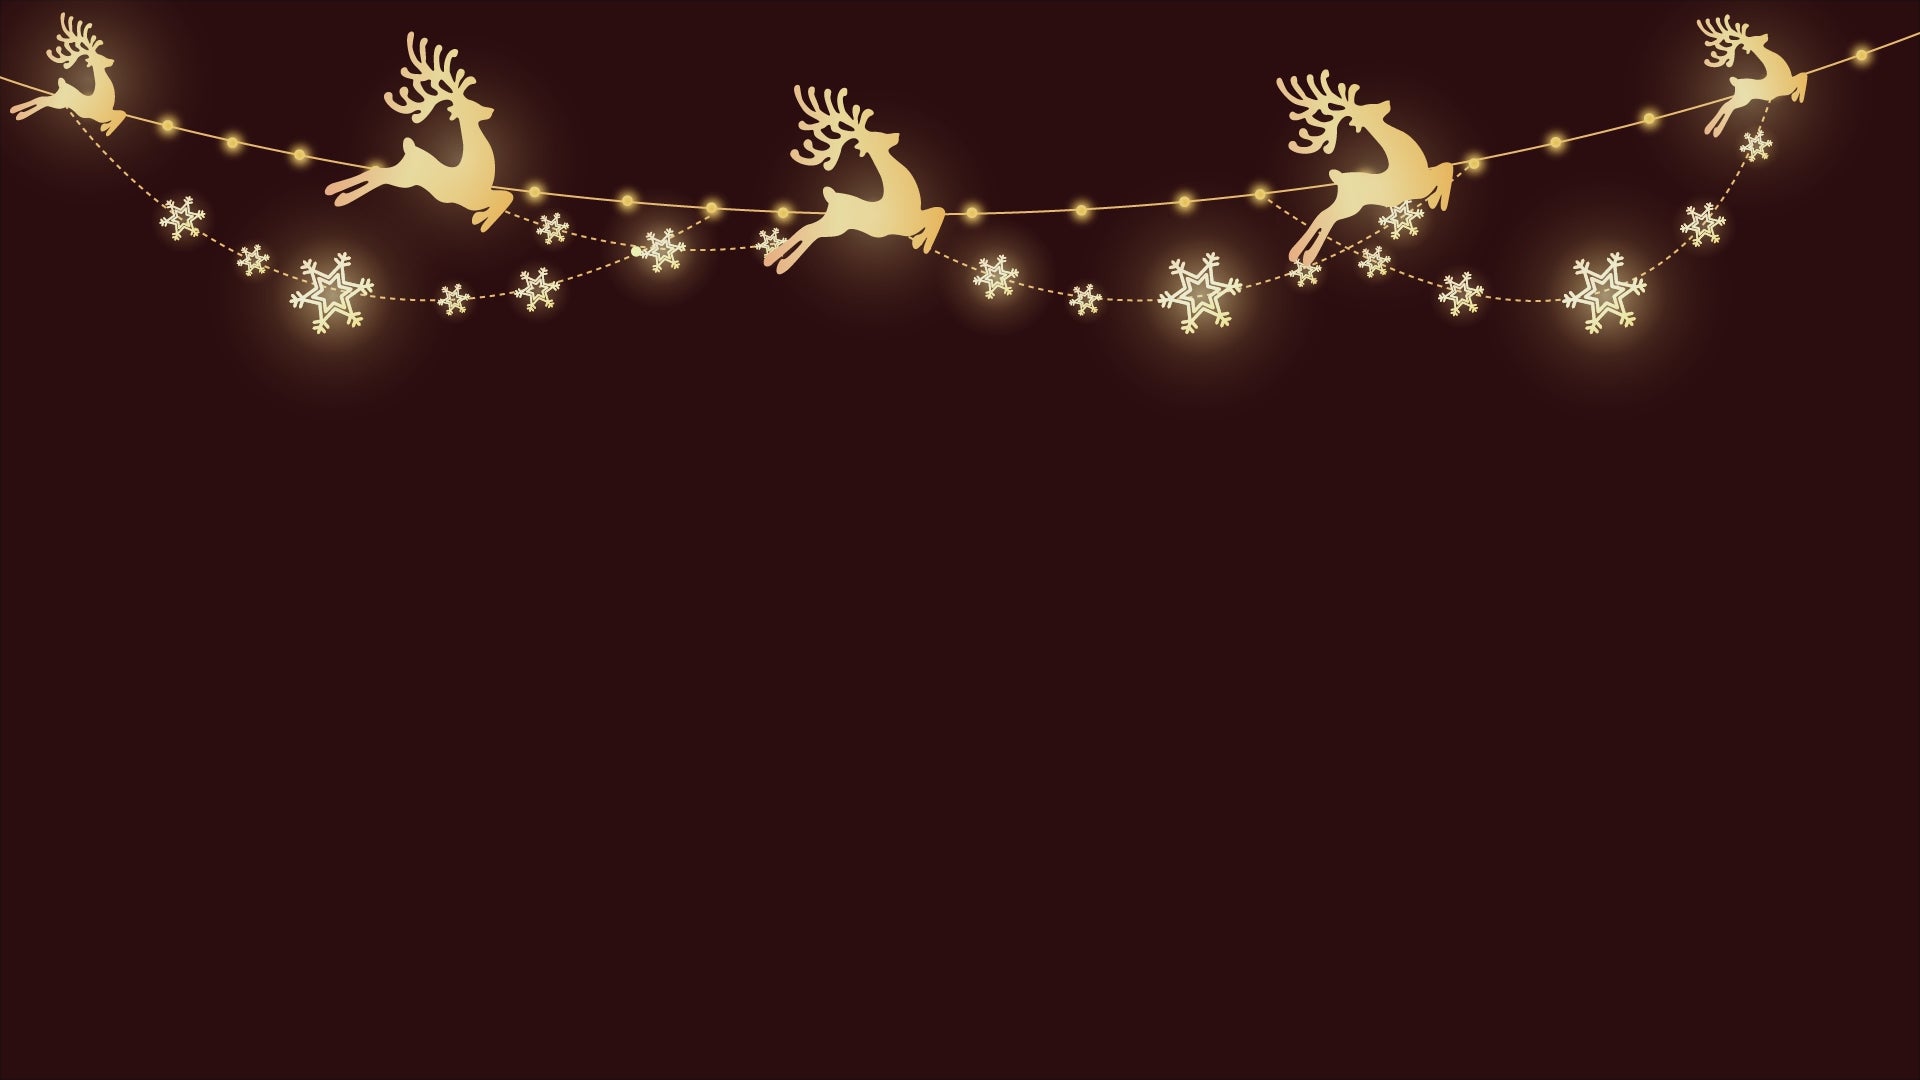 Christmas King Deer Light Chain Animated Stream Decorations